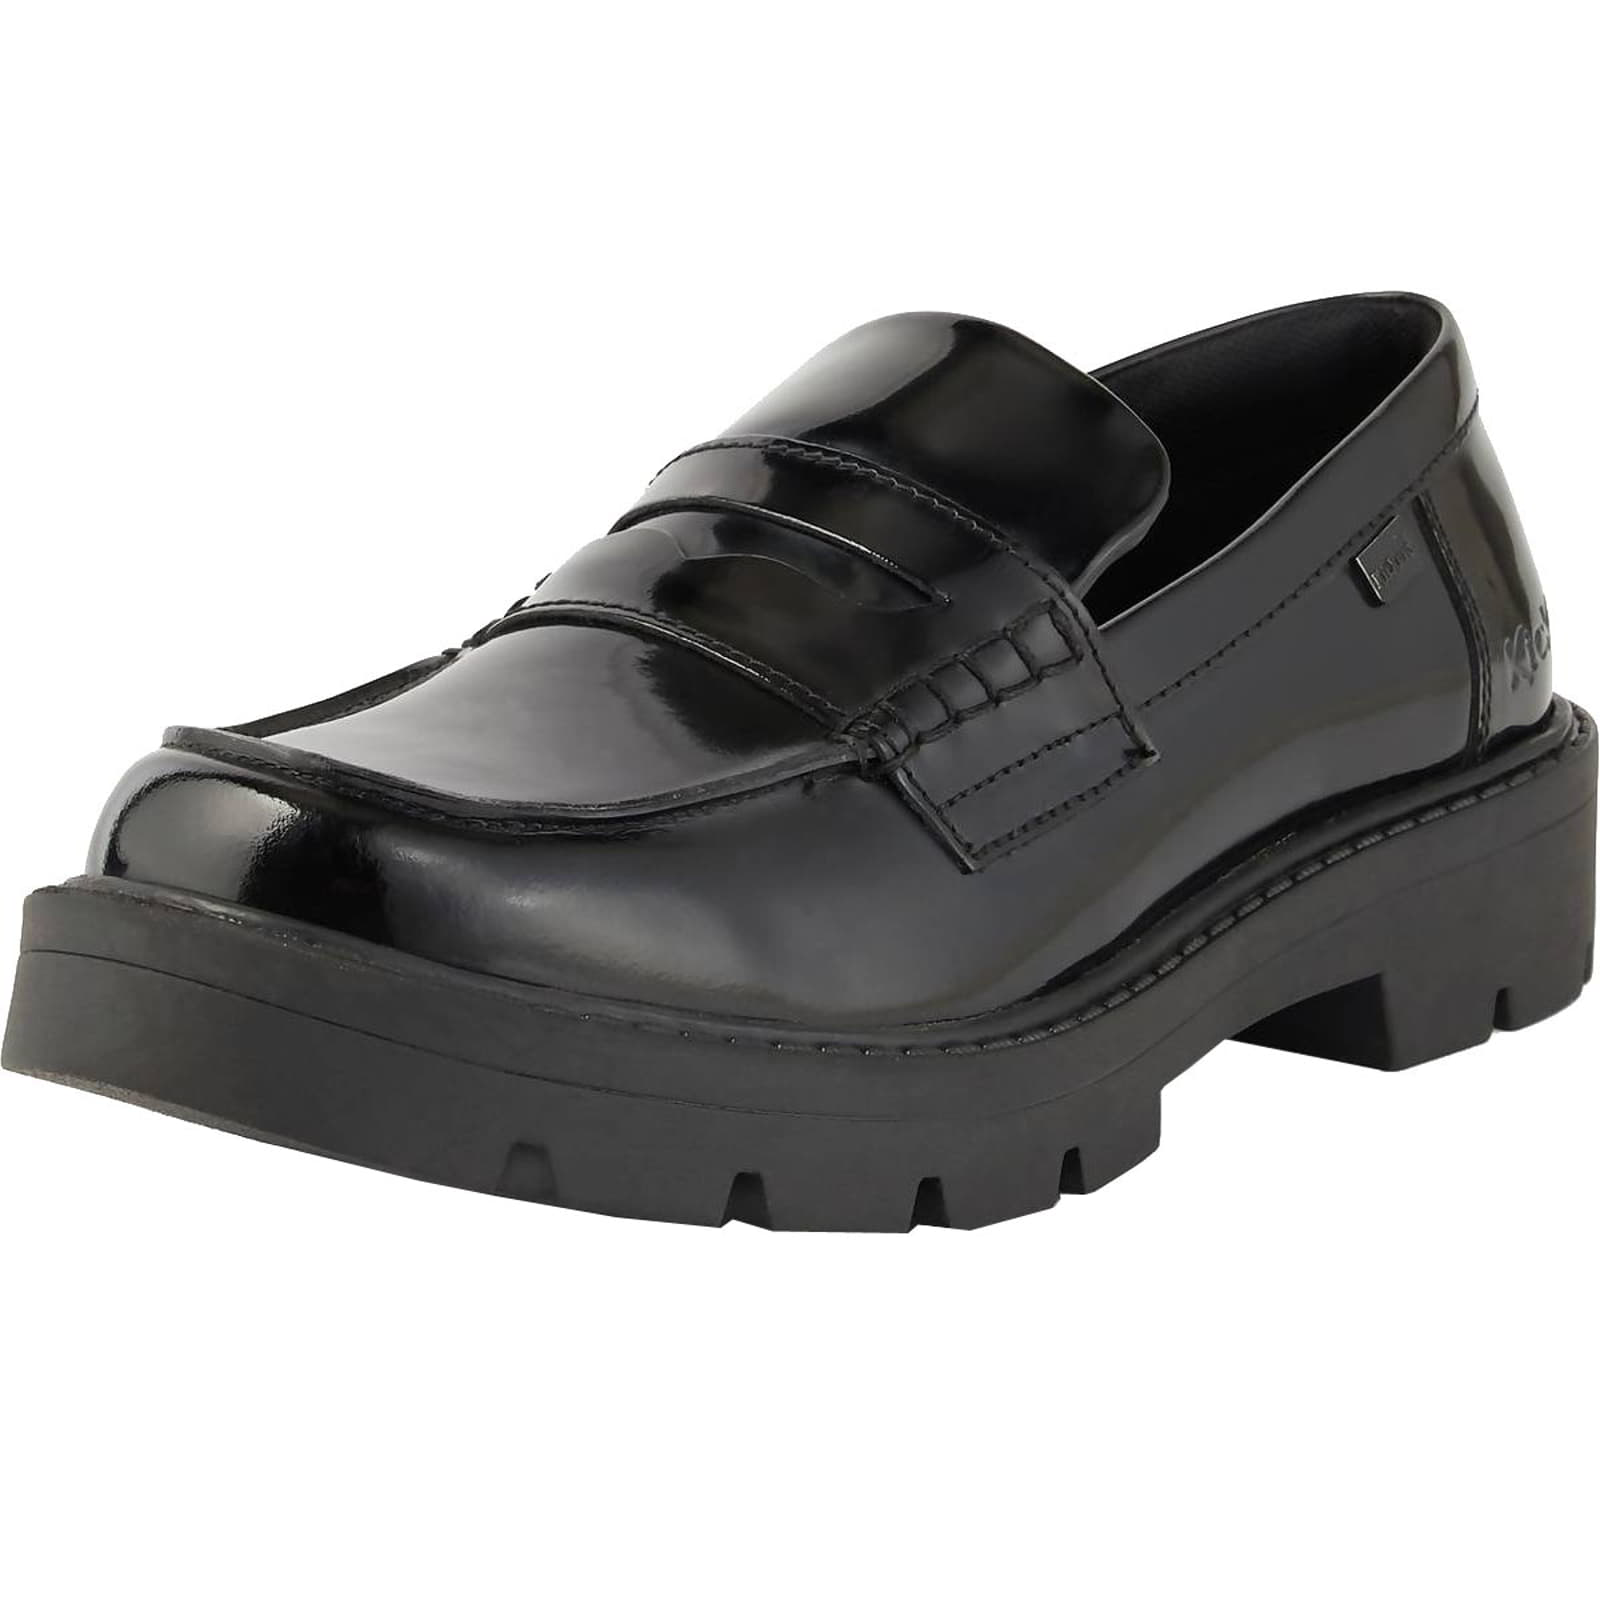 Kickers Women's Kori Loafer Leather Shoes  - UK 6.5 / EU 40